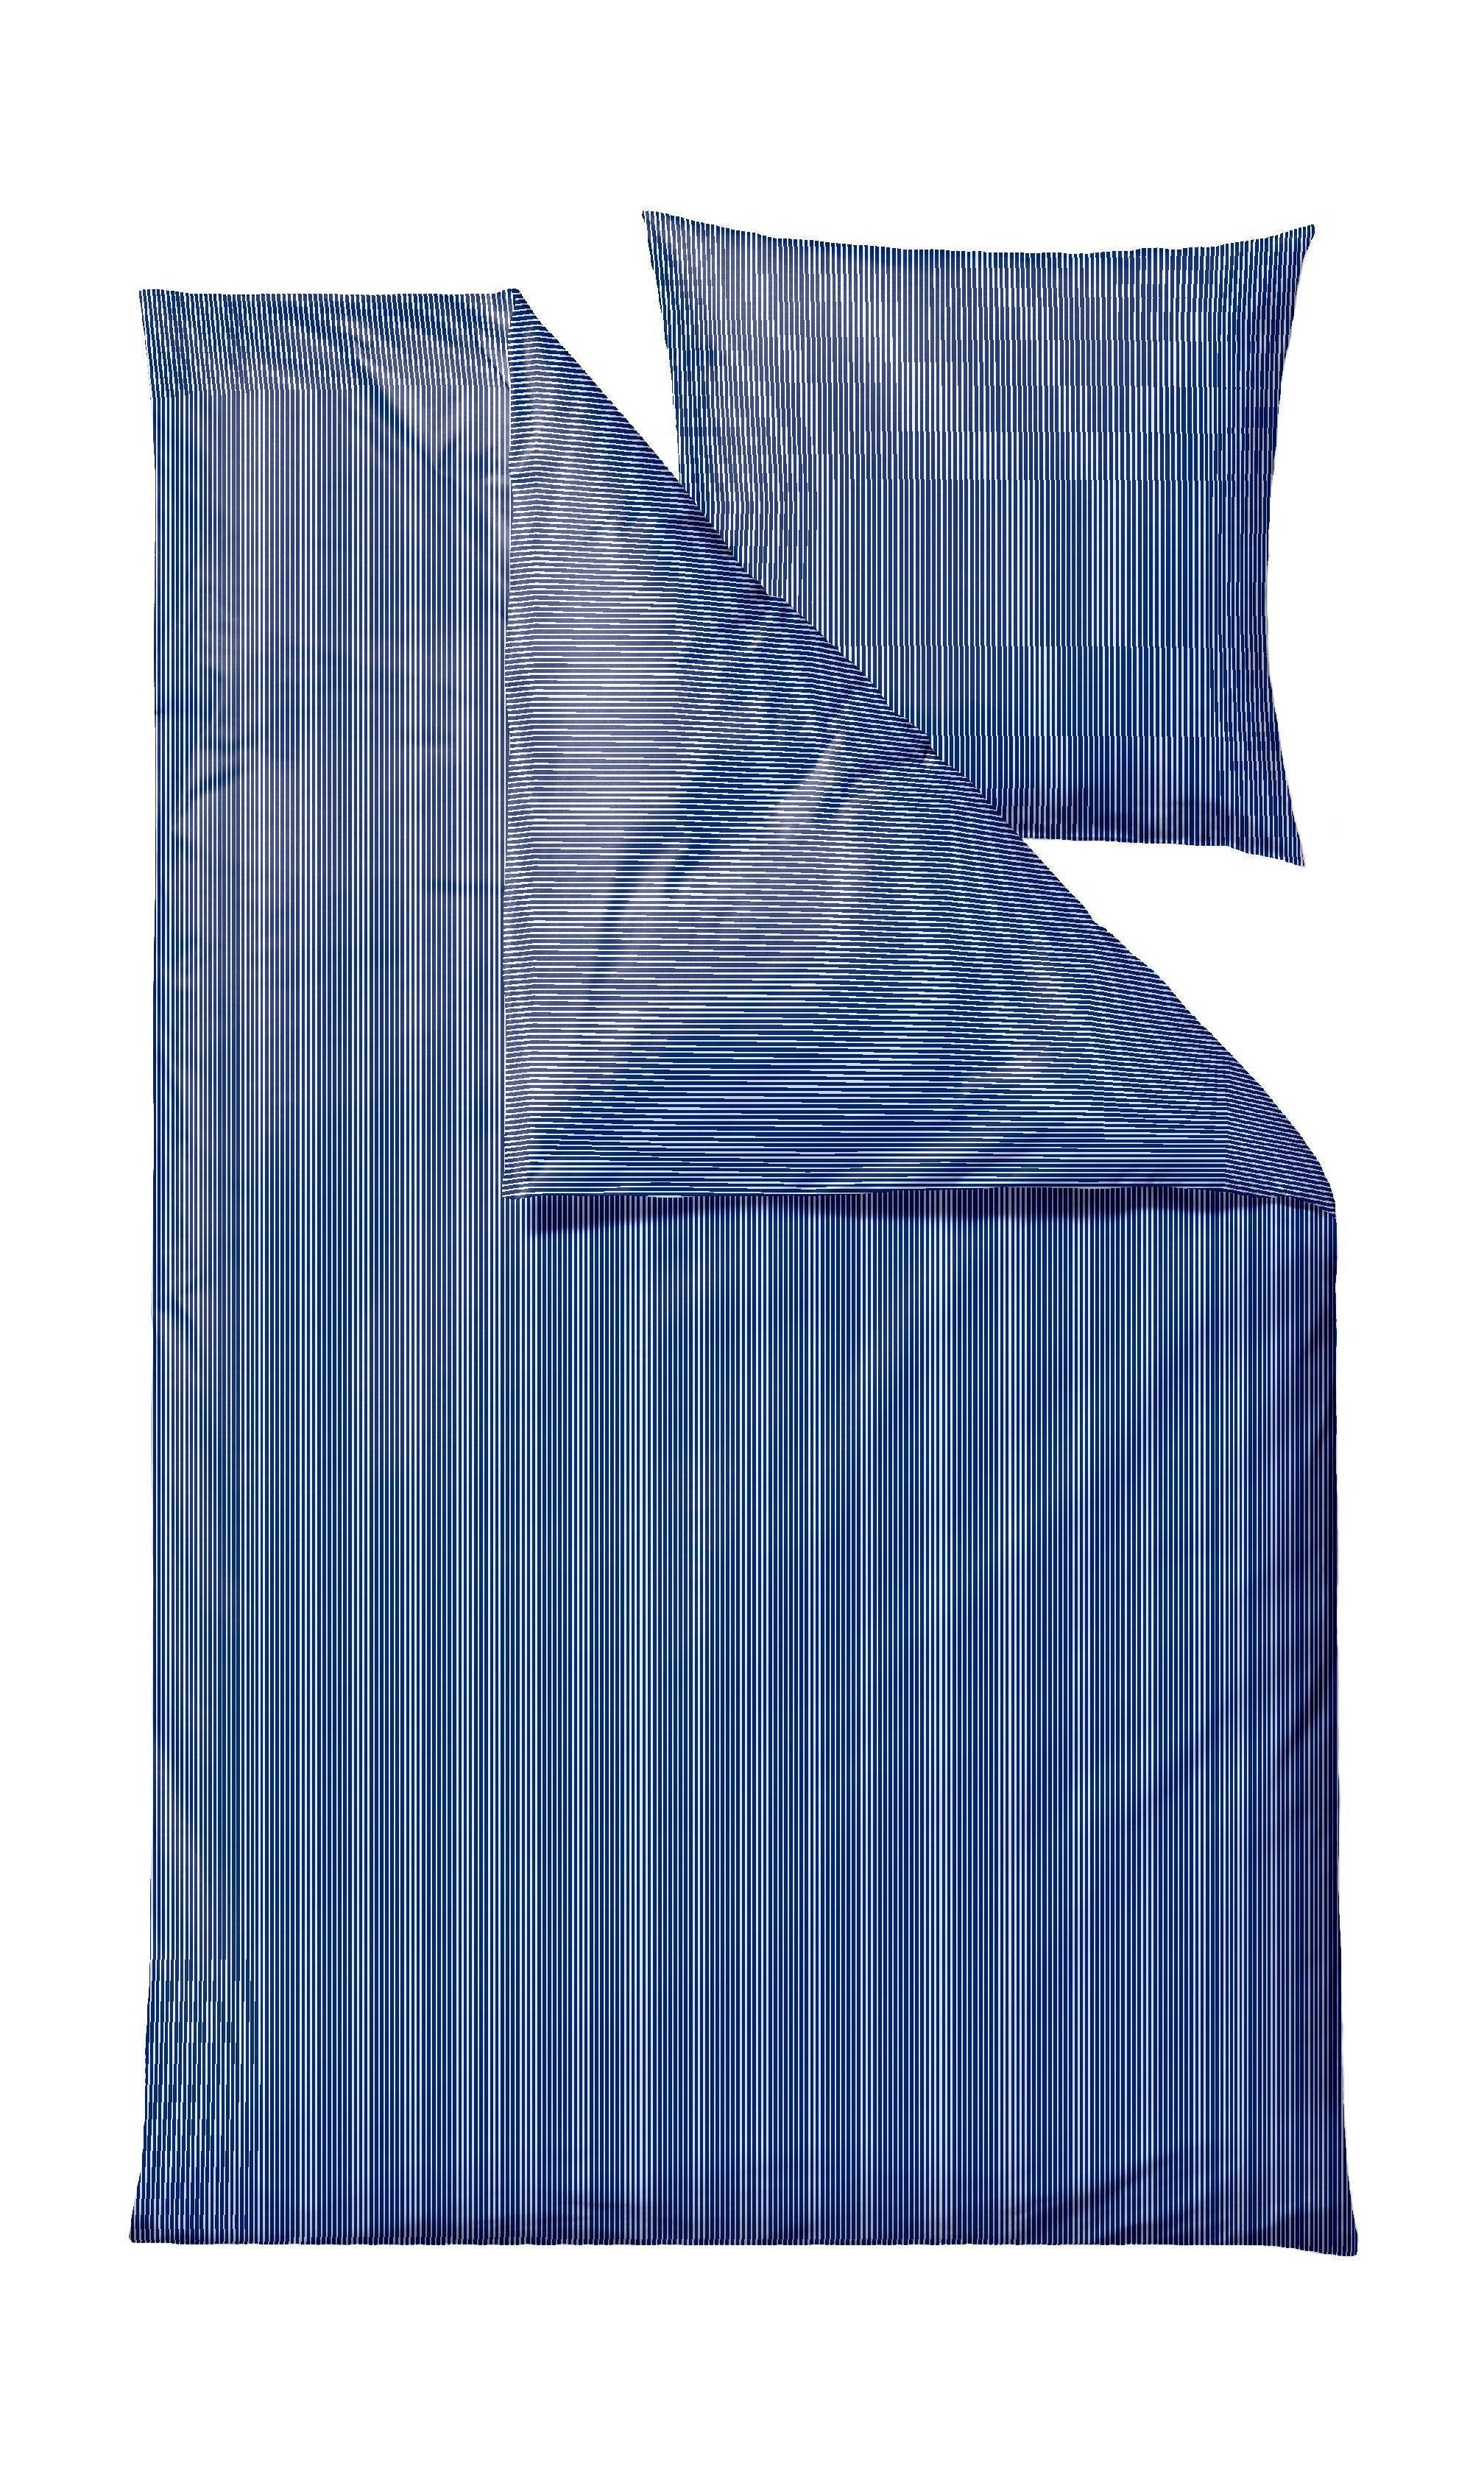 Södahl Fröhliches Bett Leinen 140 x 220 cm, königsblau